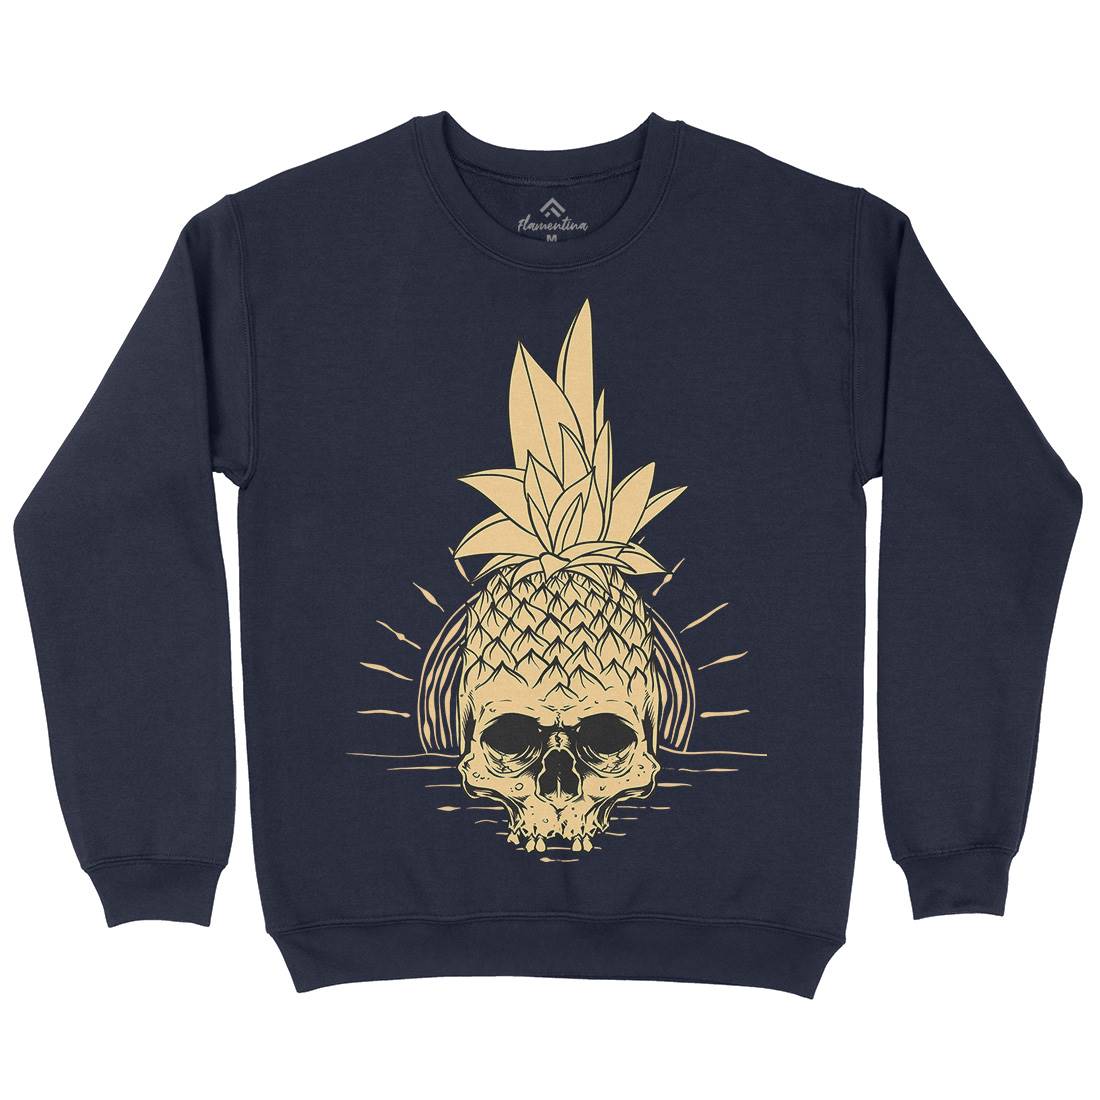 Pineapple Skull Kids Crew Neck Sweatshirt Holiday D480